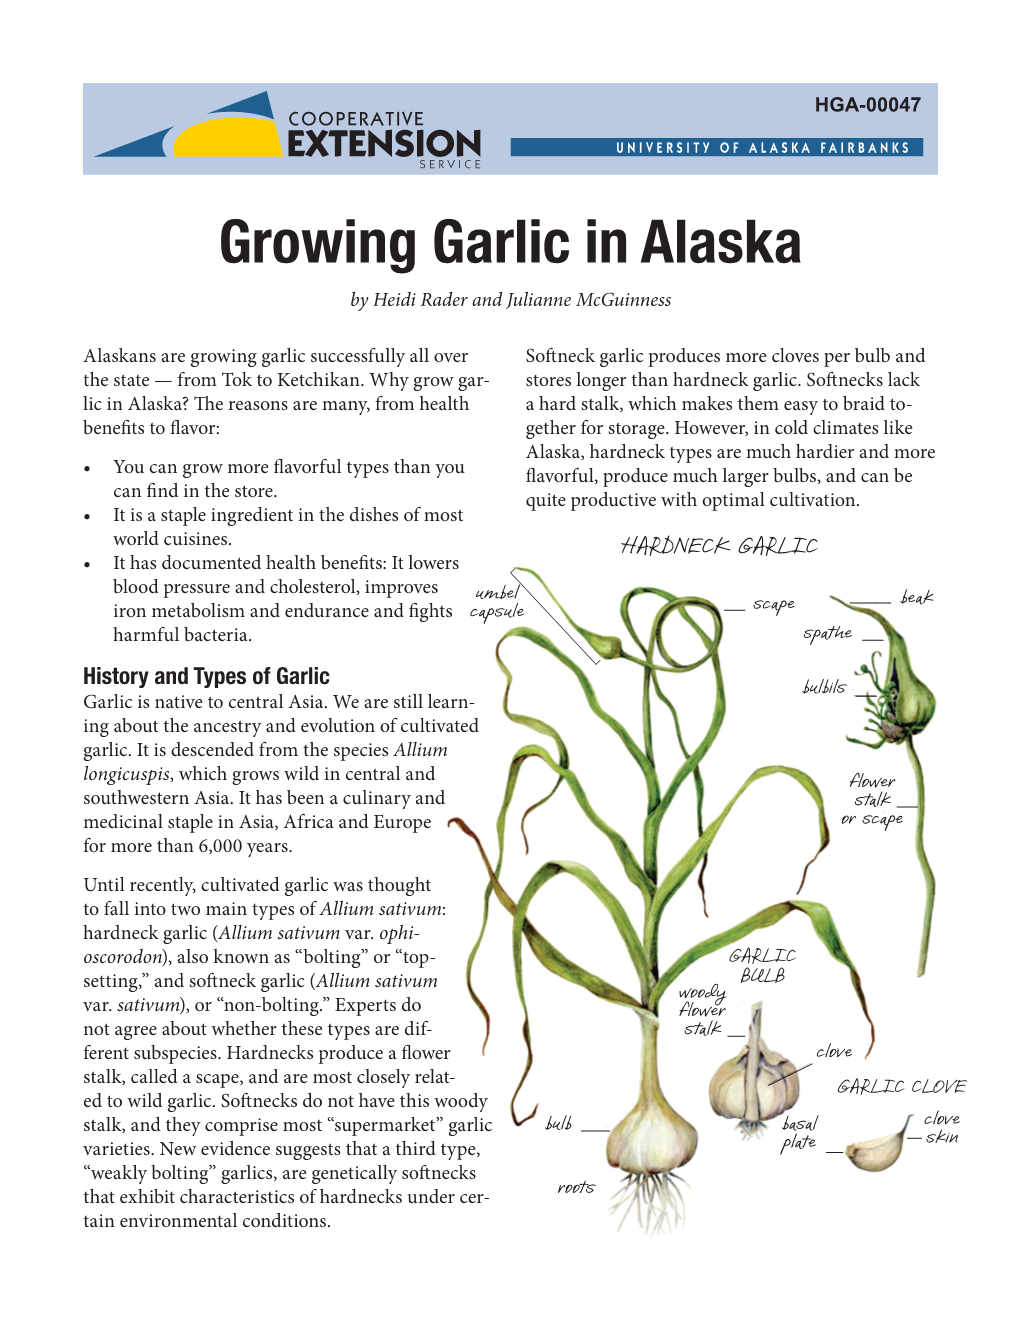 Growing Garlic in Alaska by Heidi Rader and Julianne Mcguinness